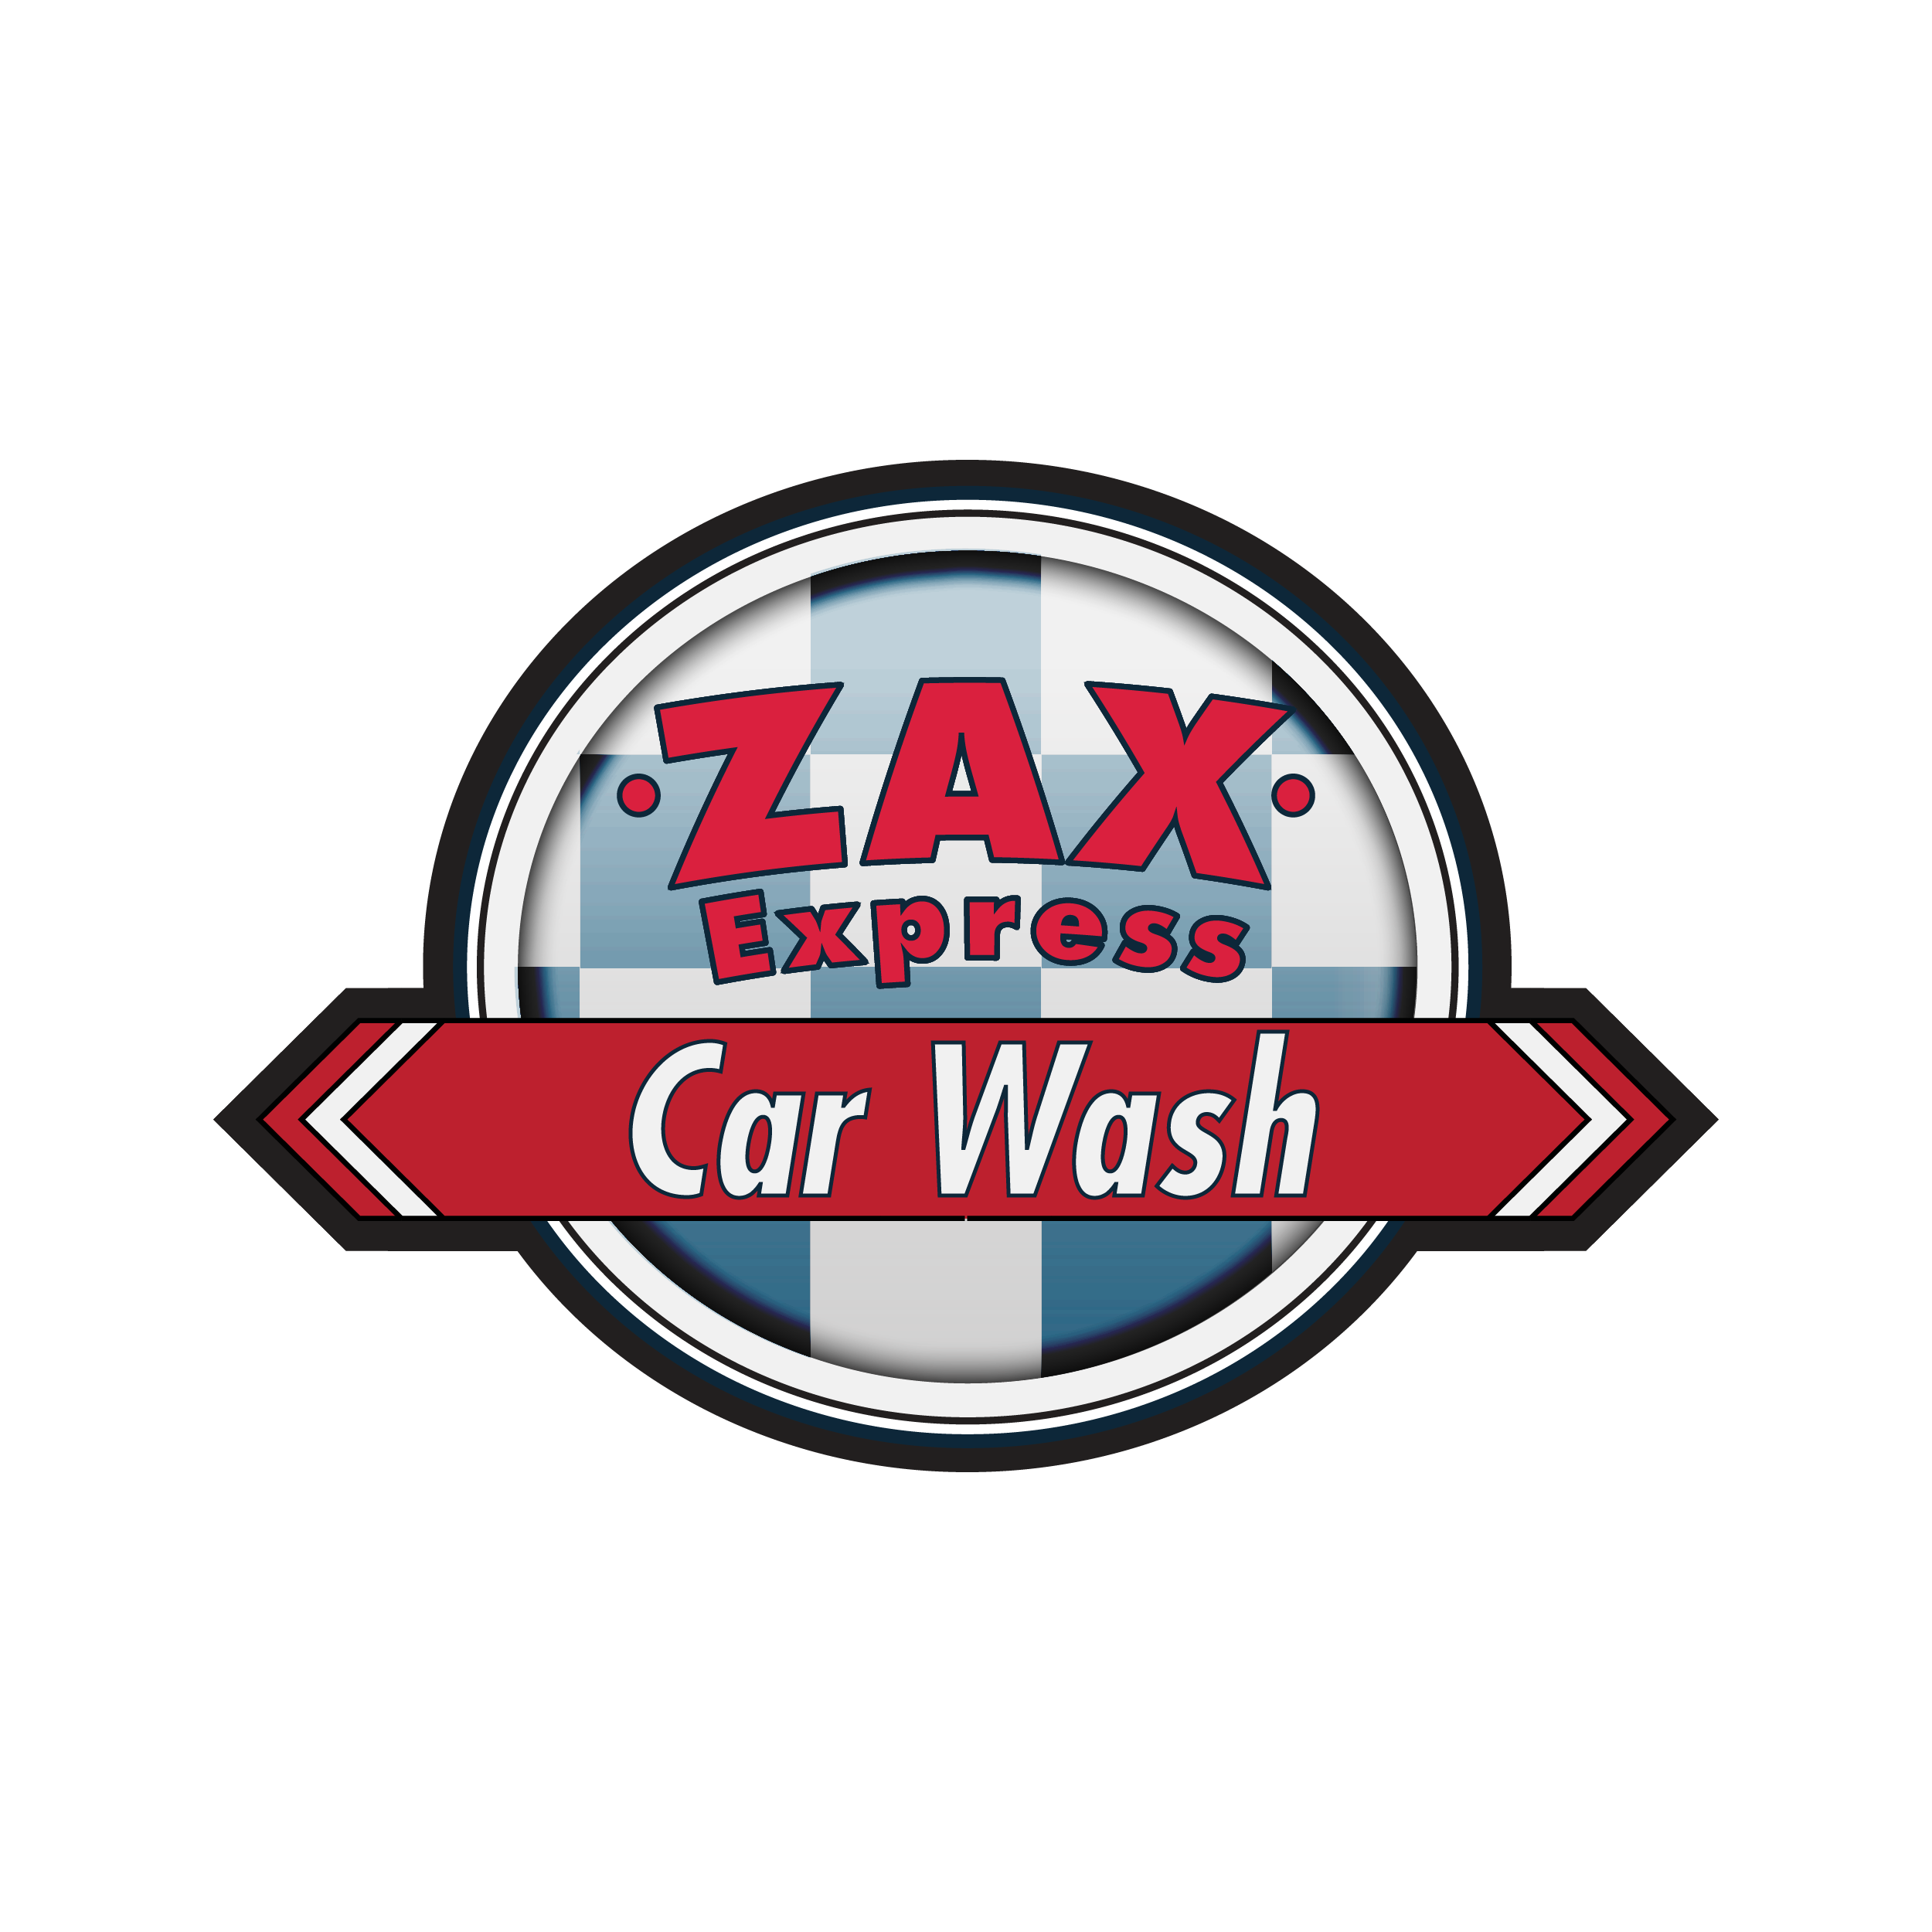 Zax Expess Car Wash